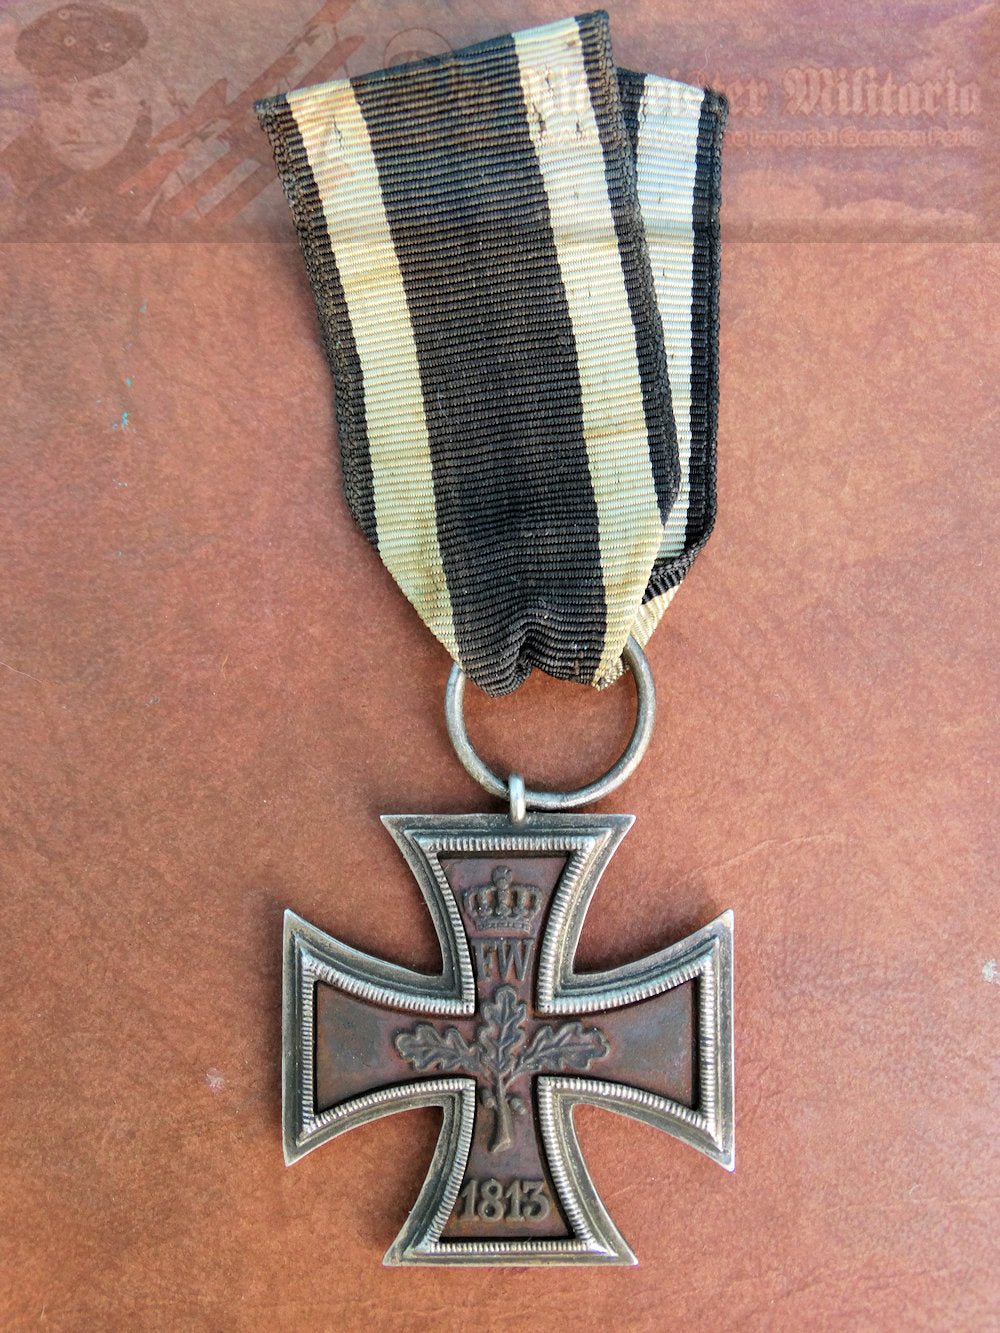 Prussia Iron Cross 1813 2nd class Prinzengroße - Derrittmeister Militaria Group